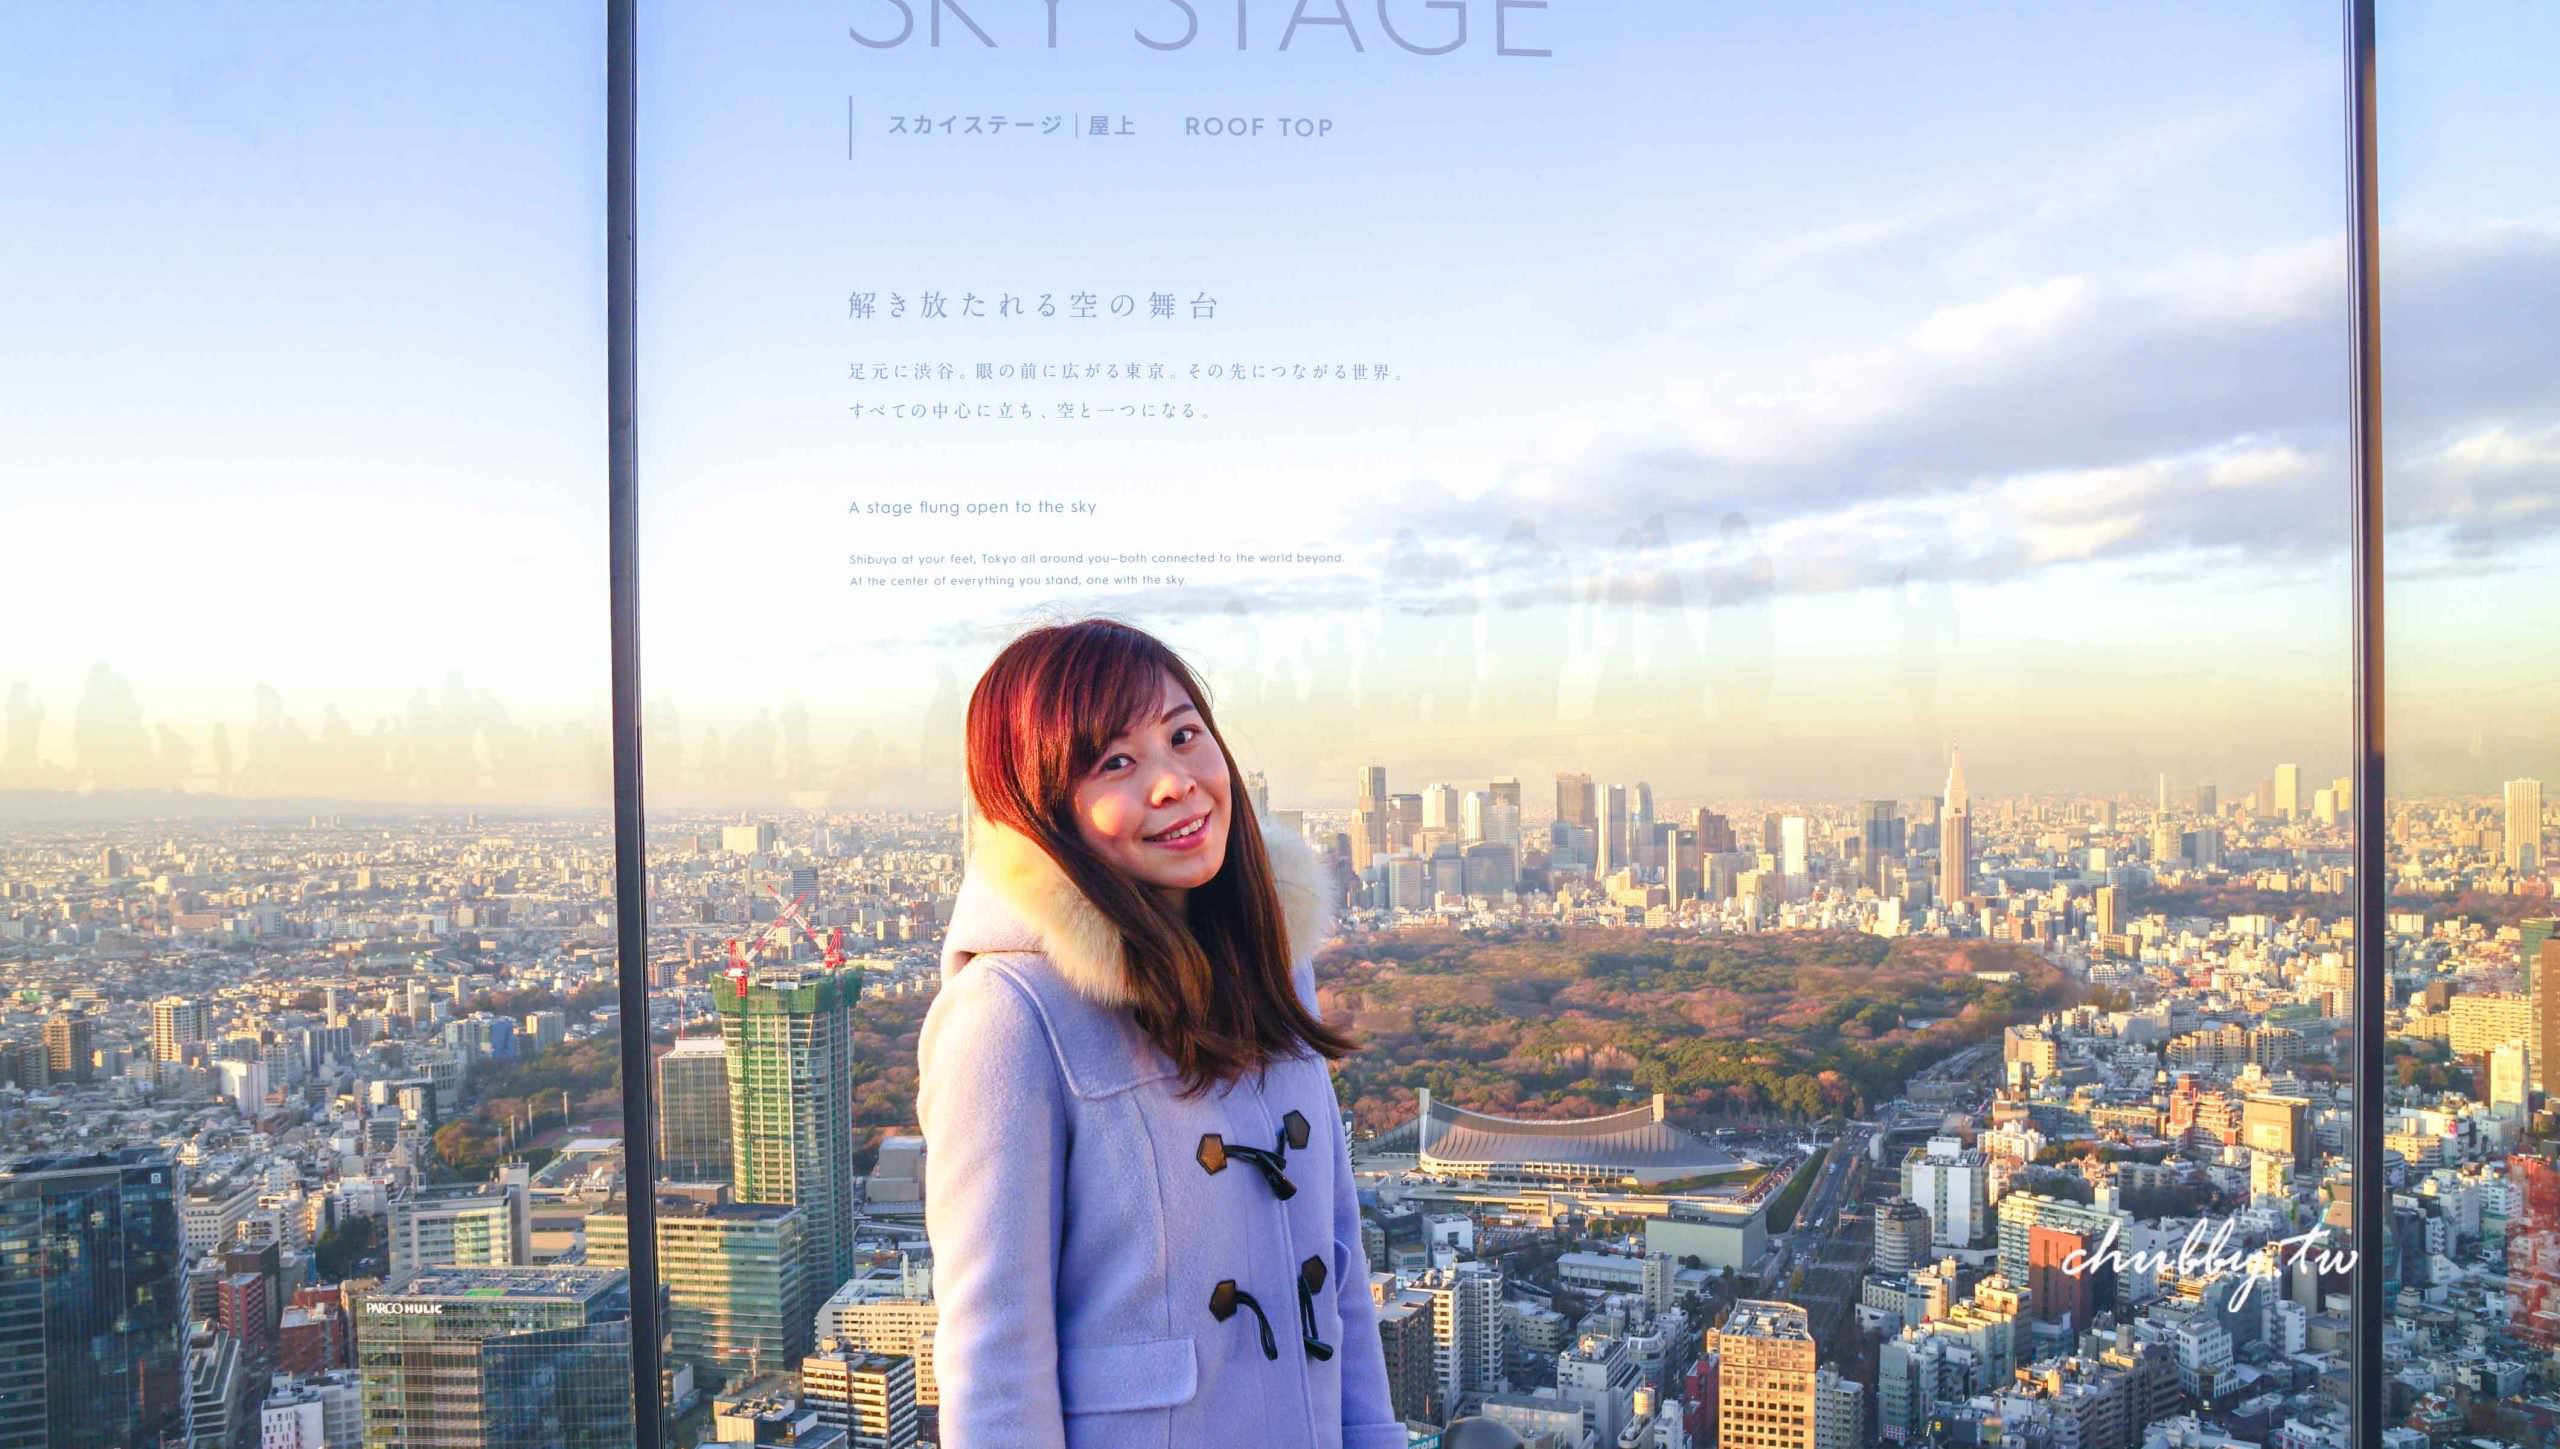 SHIBUYA SKY（渋谷スカイ）澀谷新地標購票方式、必拍景點攻略、拍照時段推薦